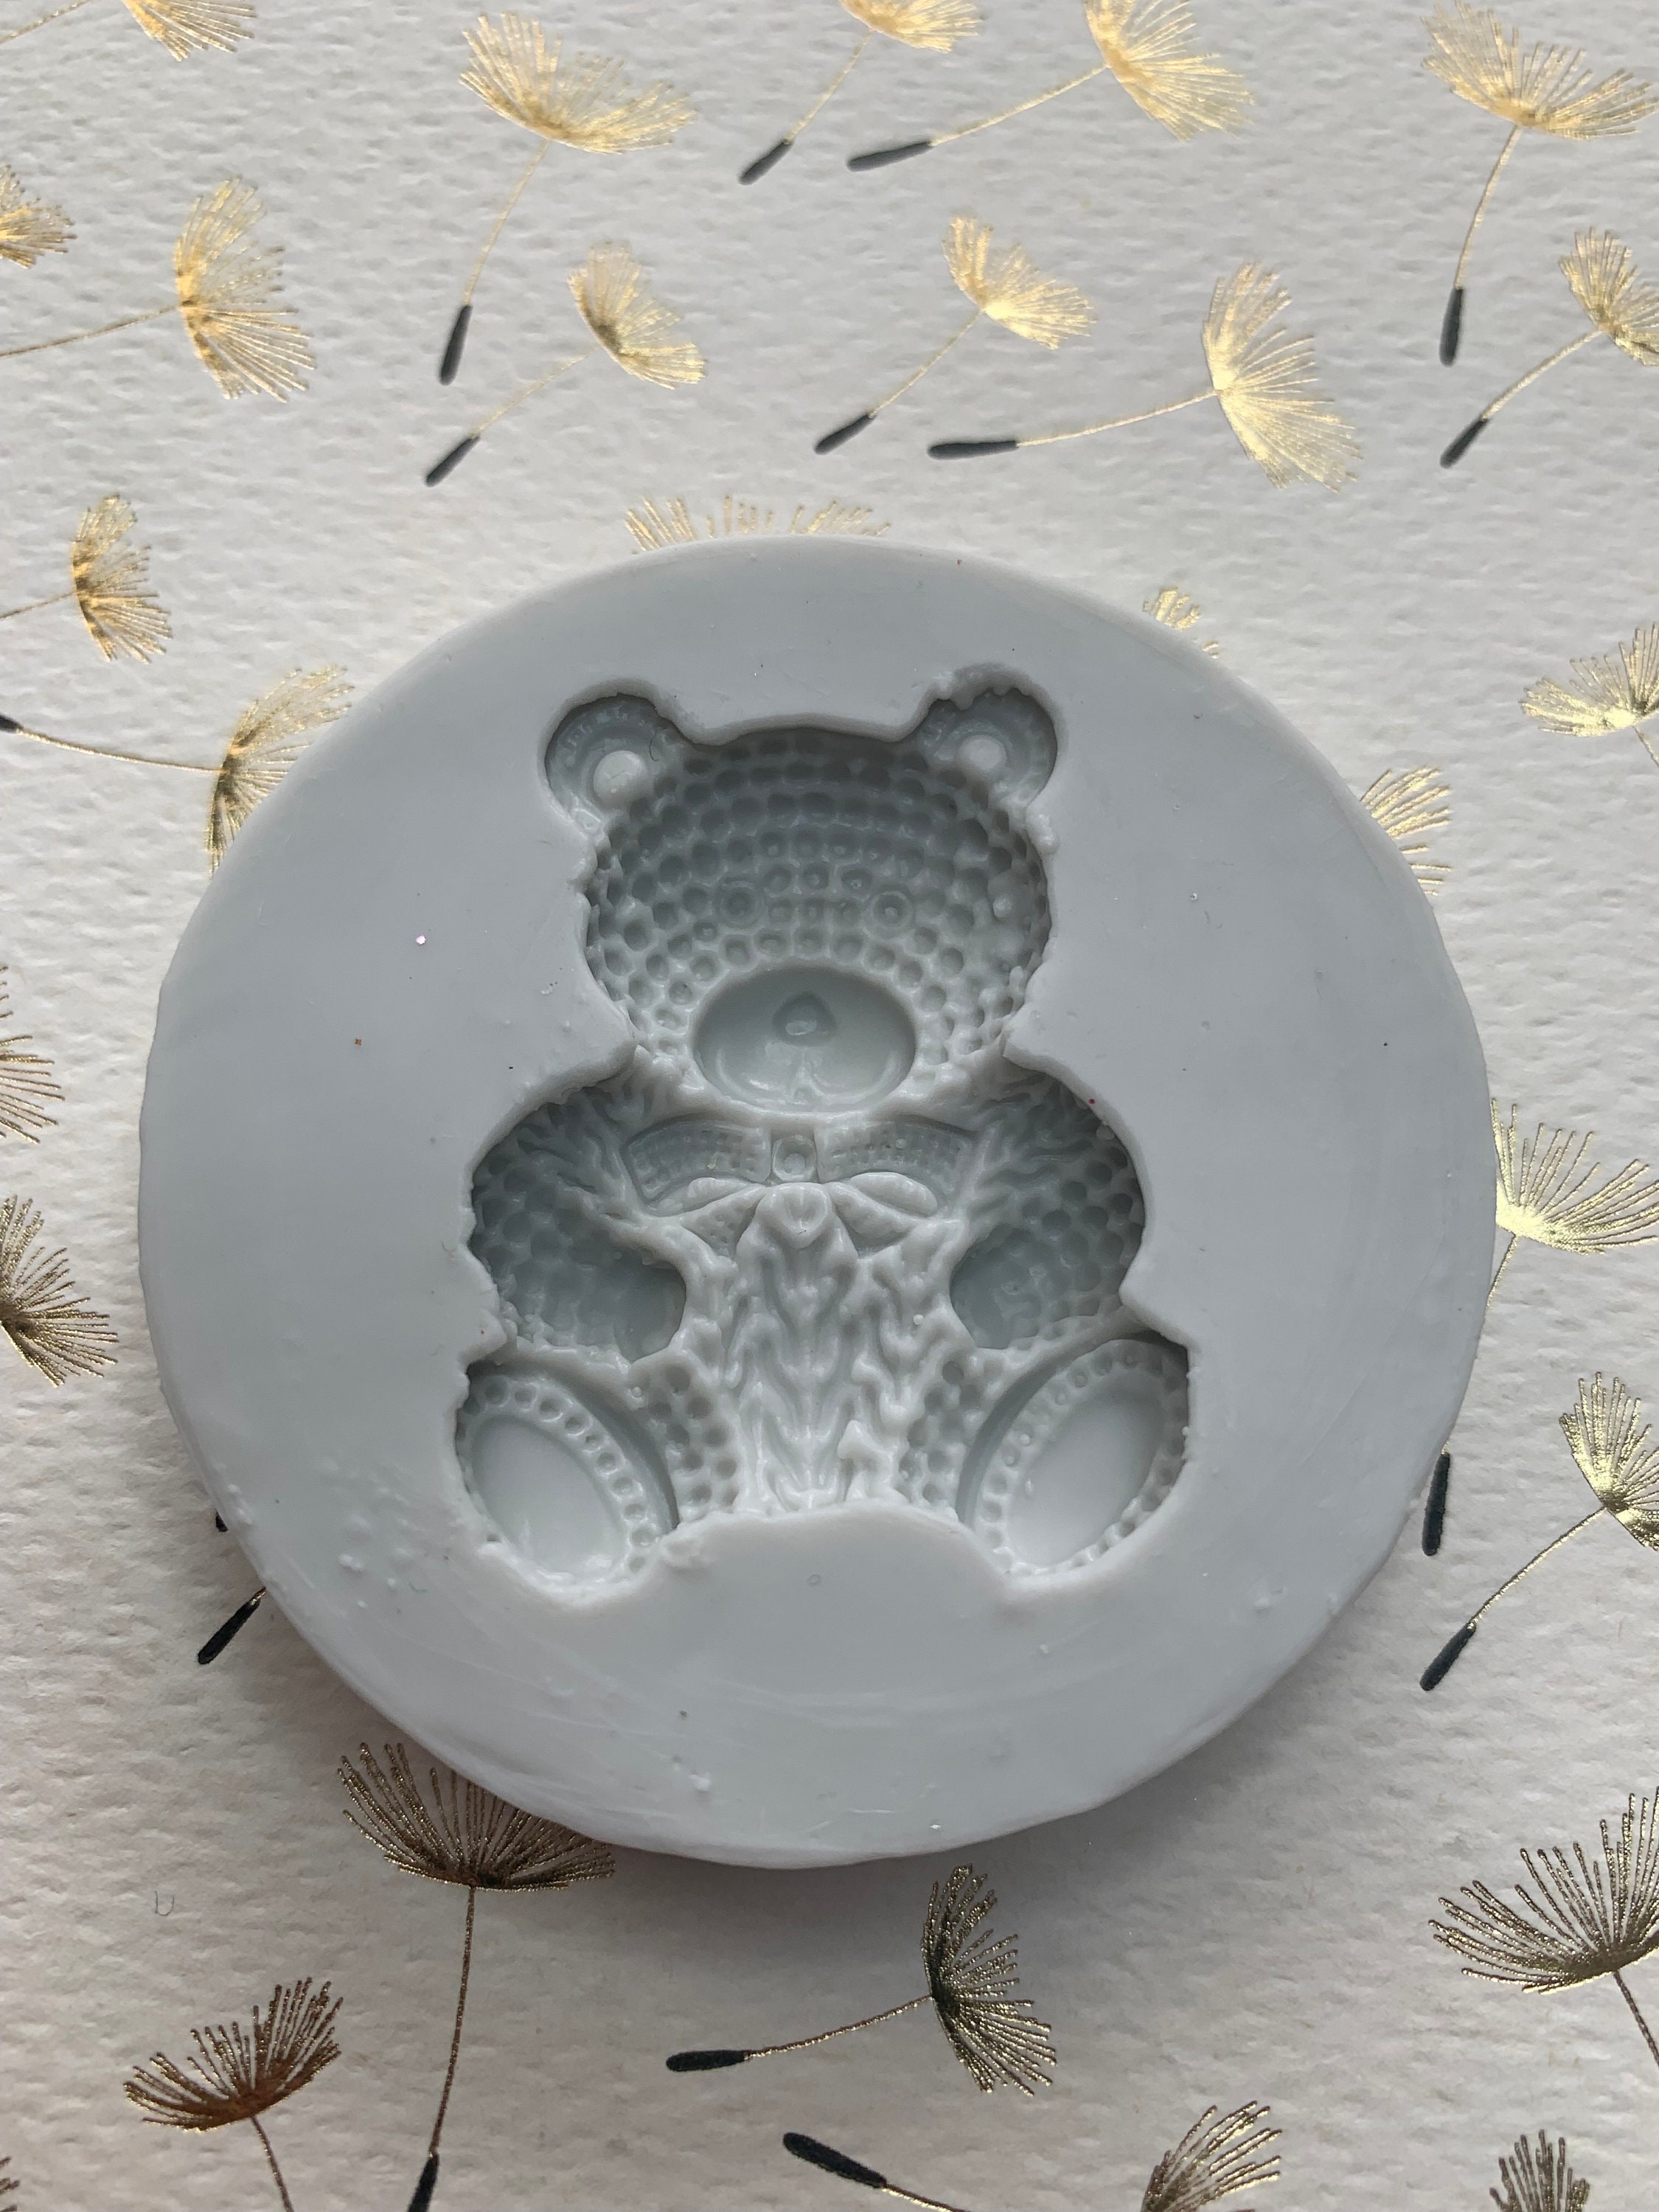 Silicone mold Teddy bear Caramel